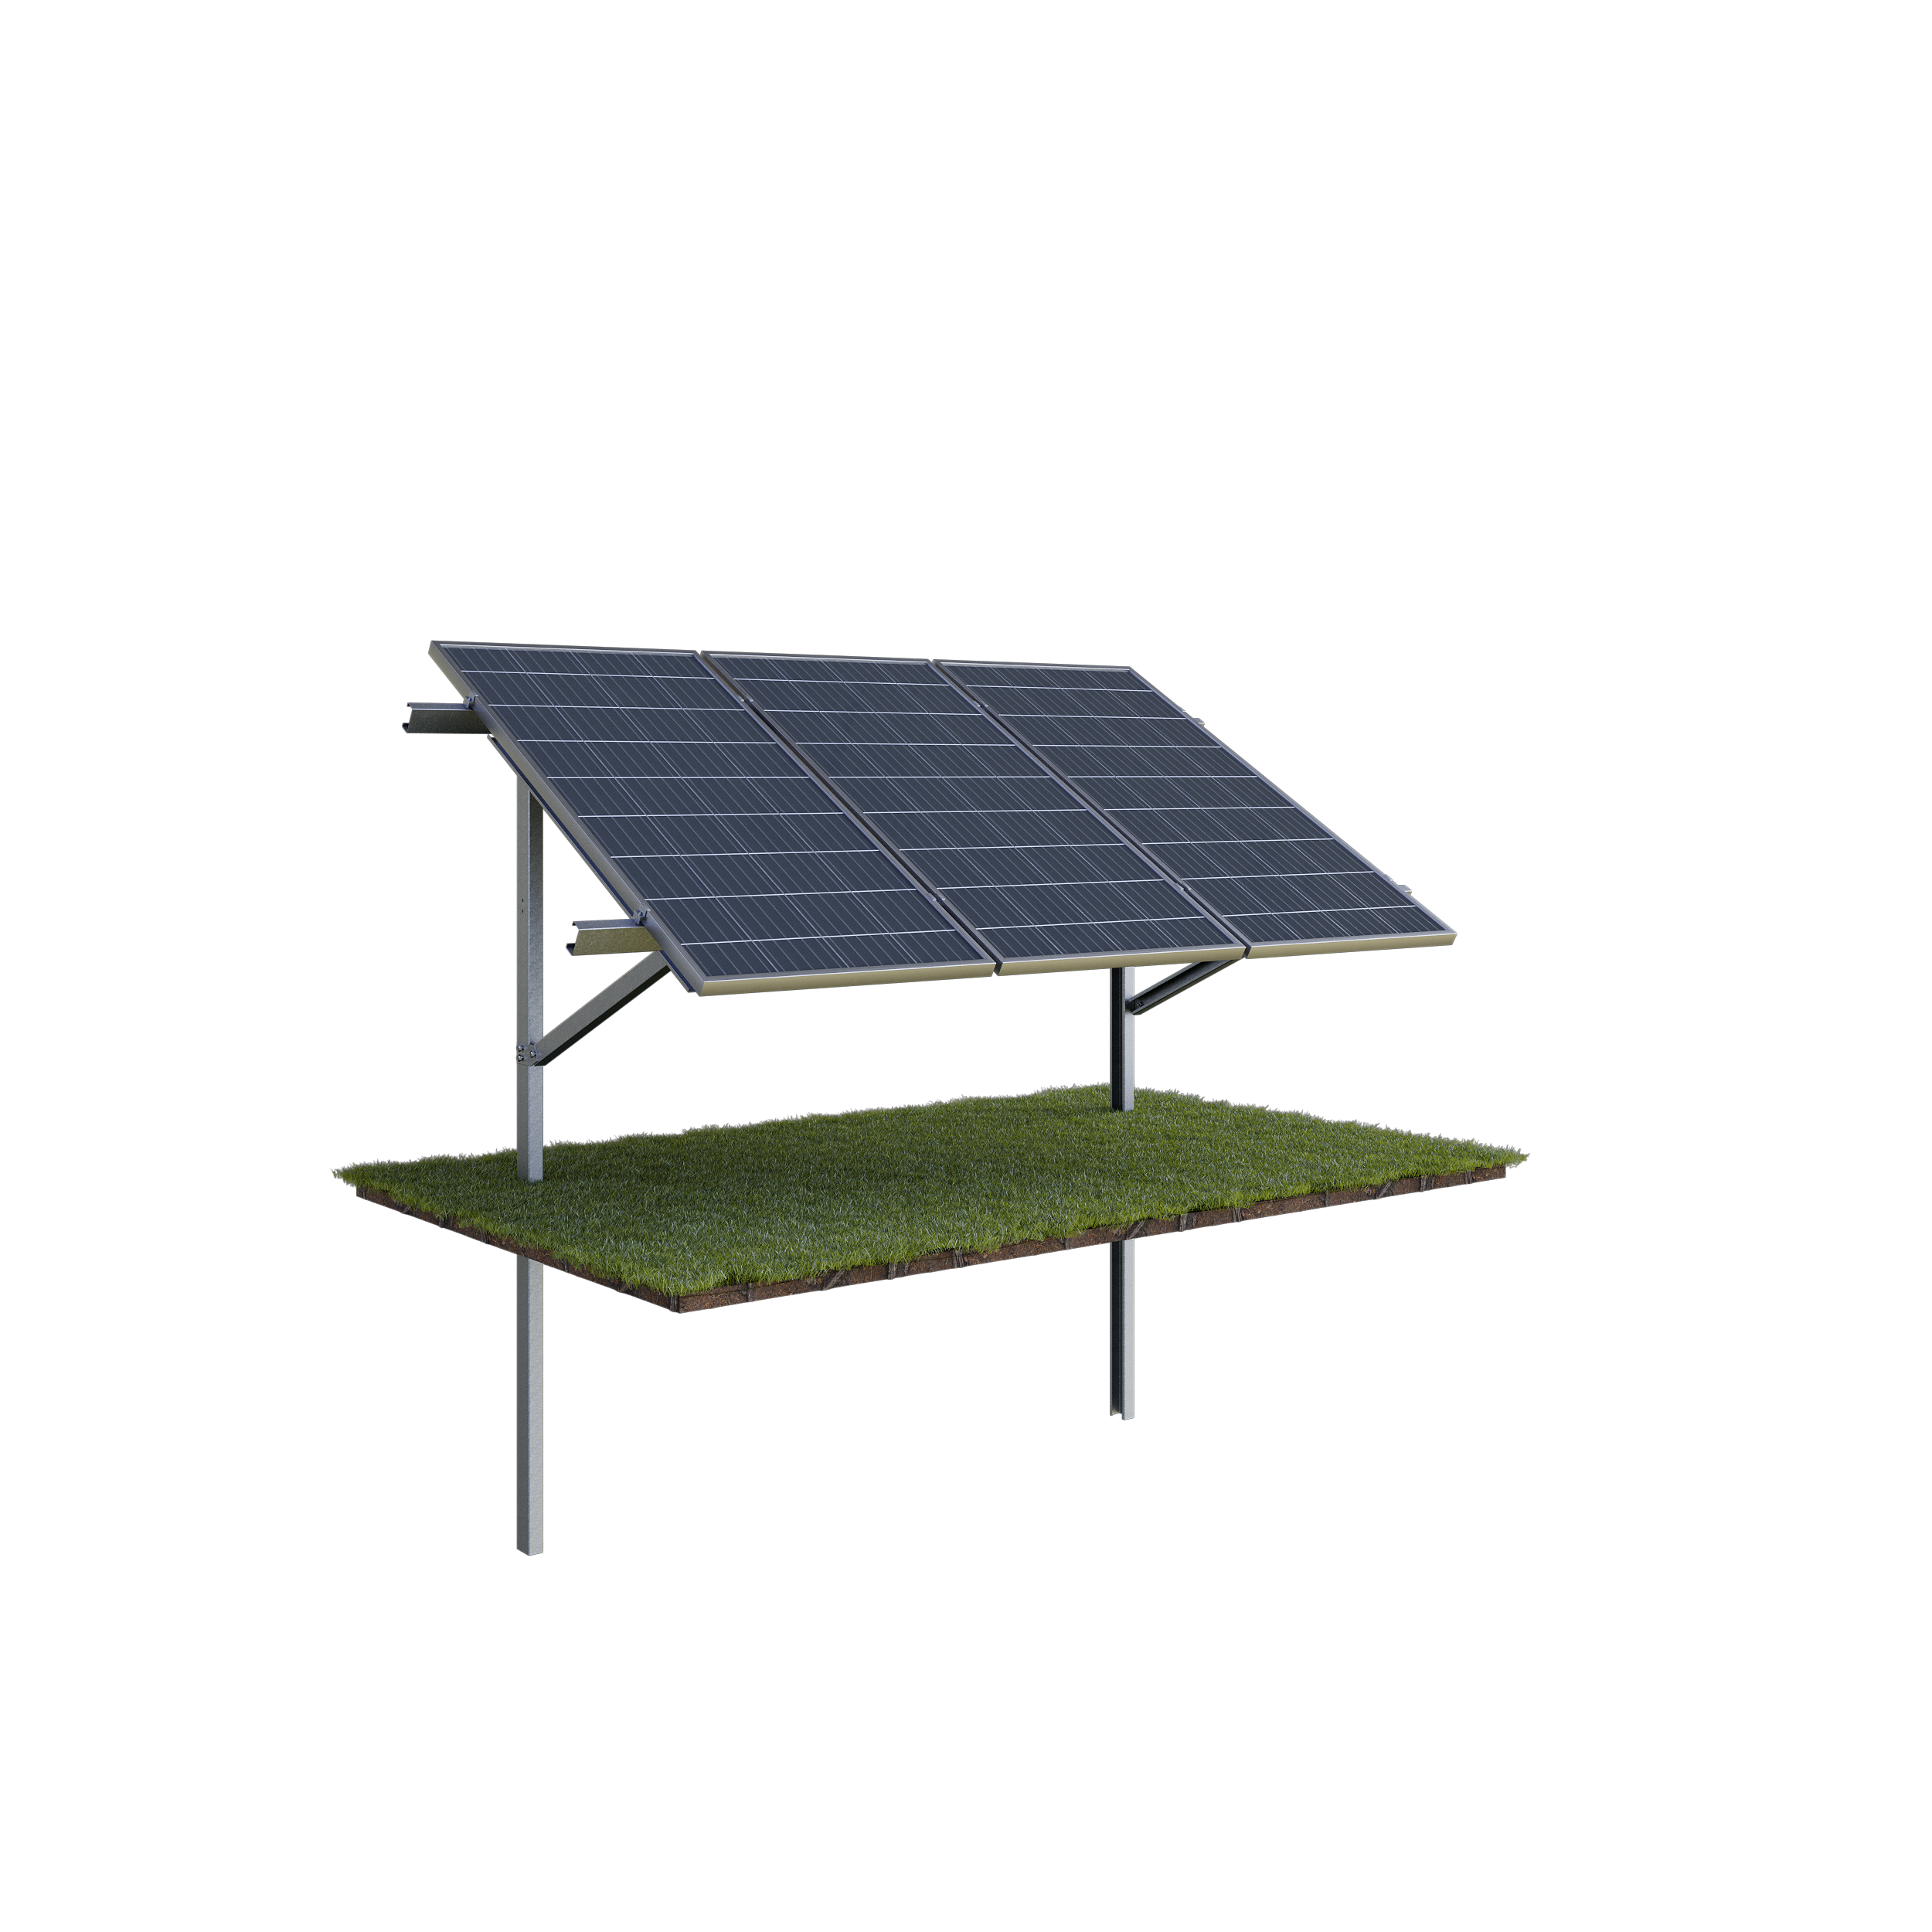 SV1 Free-standing solar construction